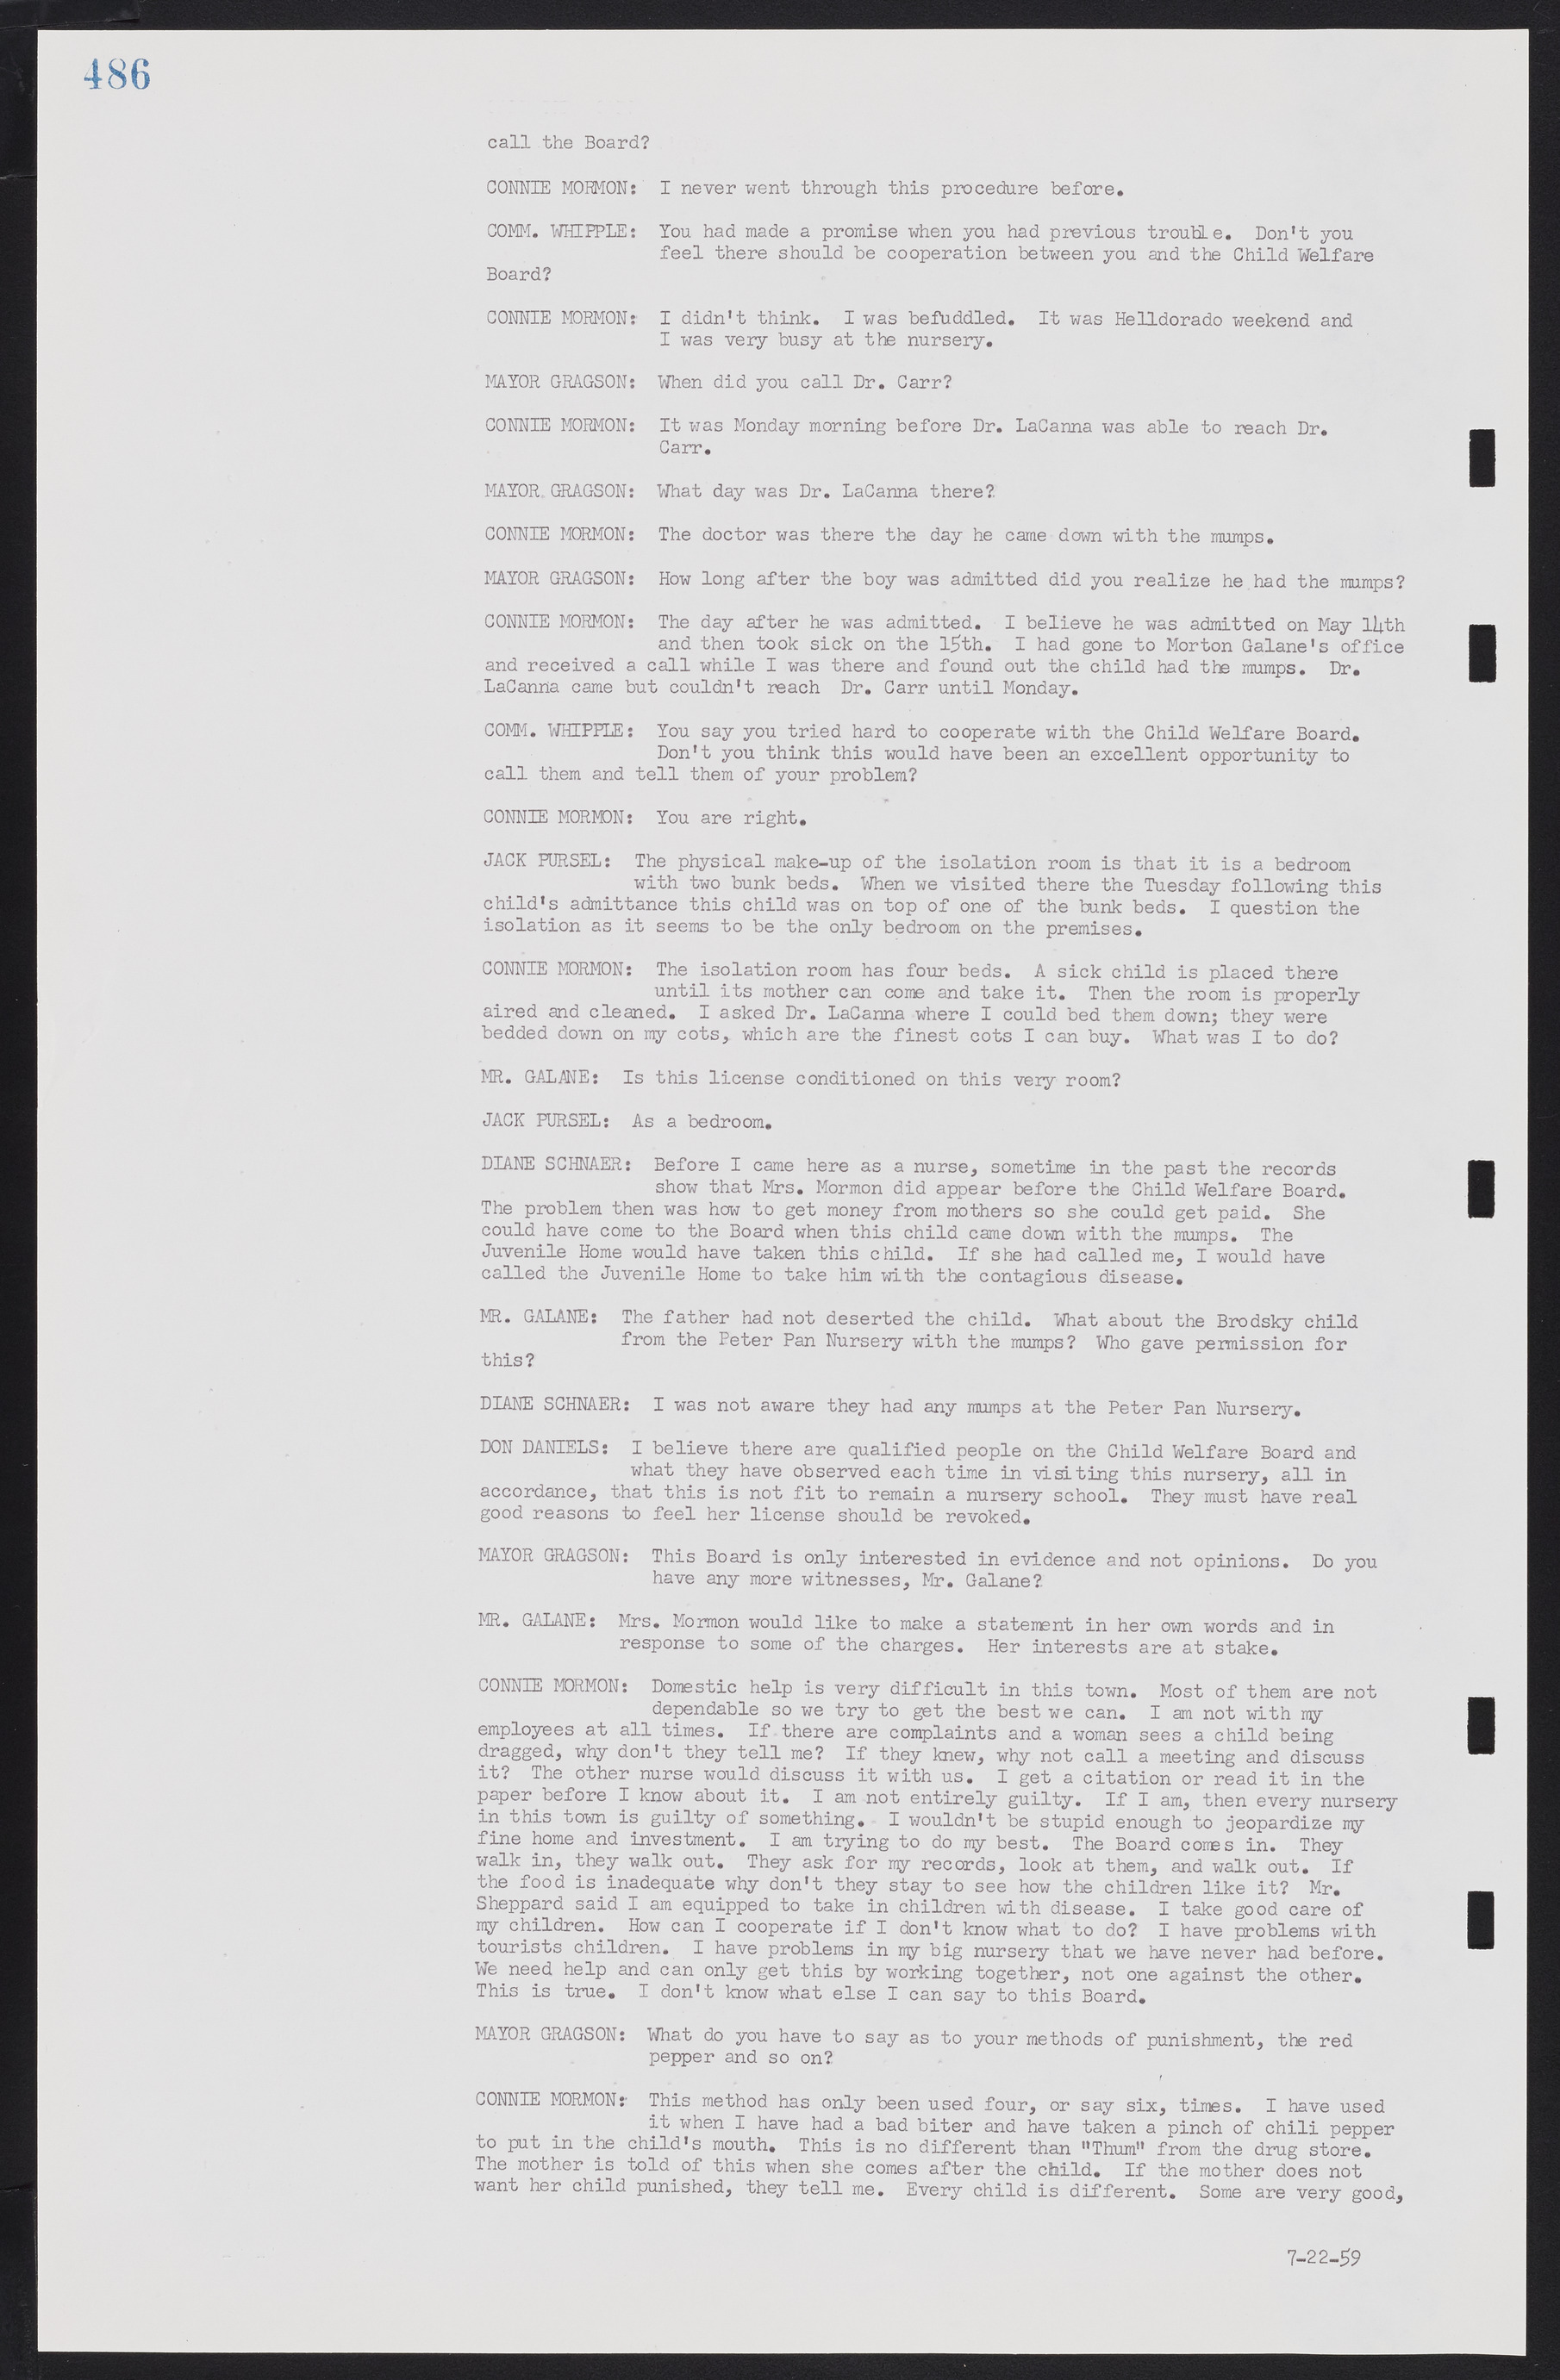 Las Vegas City Commission Minutes, November 20, 1957 to December 2, 1959, lvc000011-522